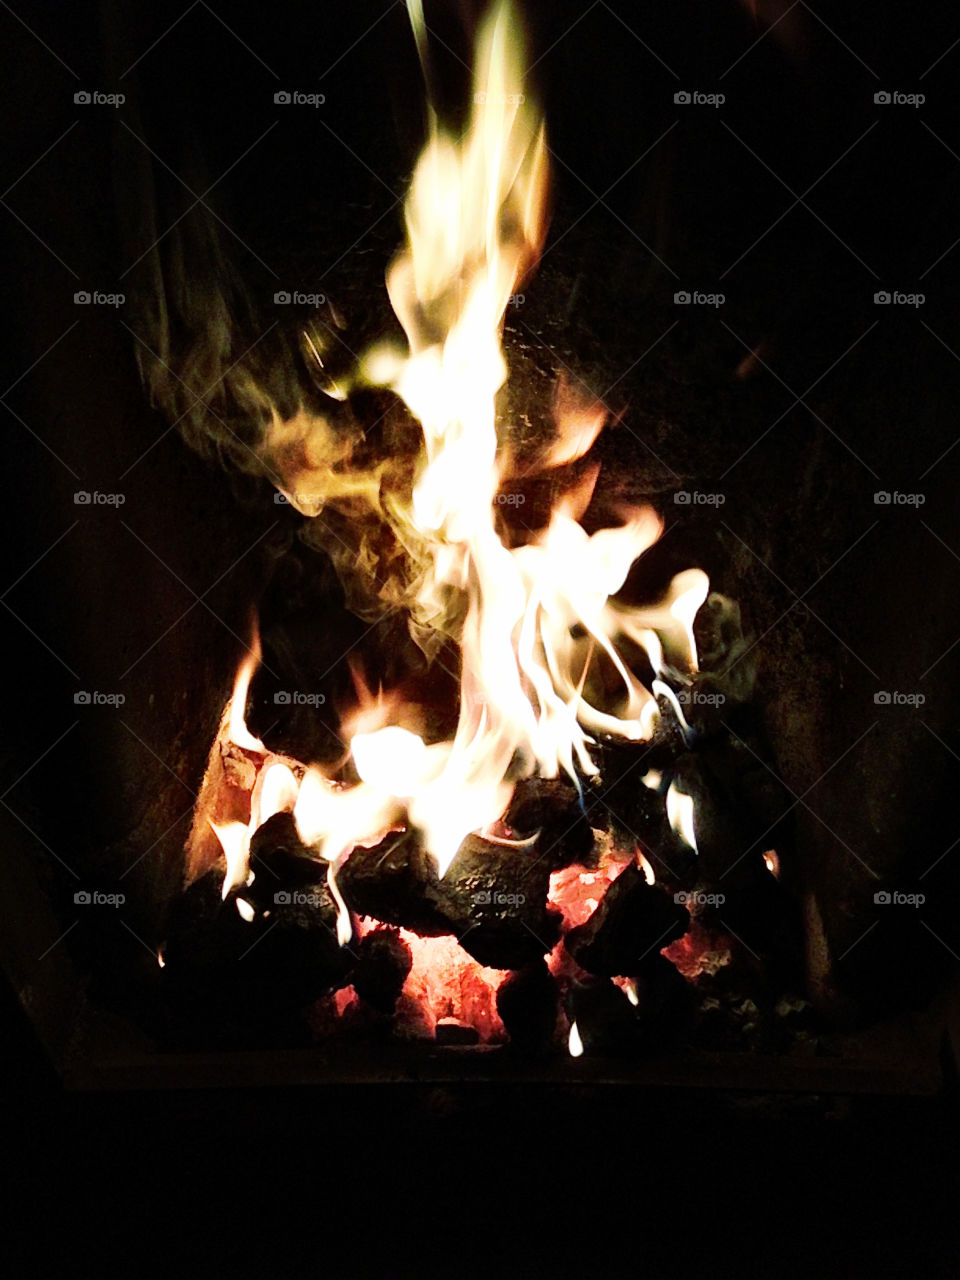 fire warmth by mrbrickley